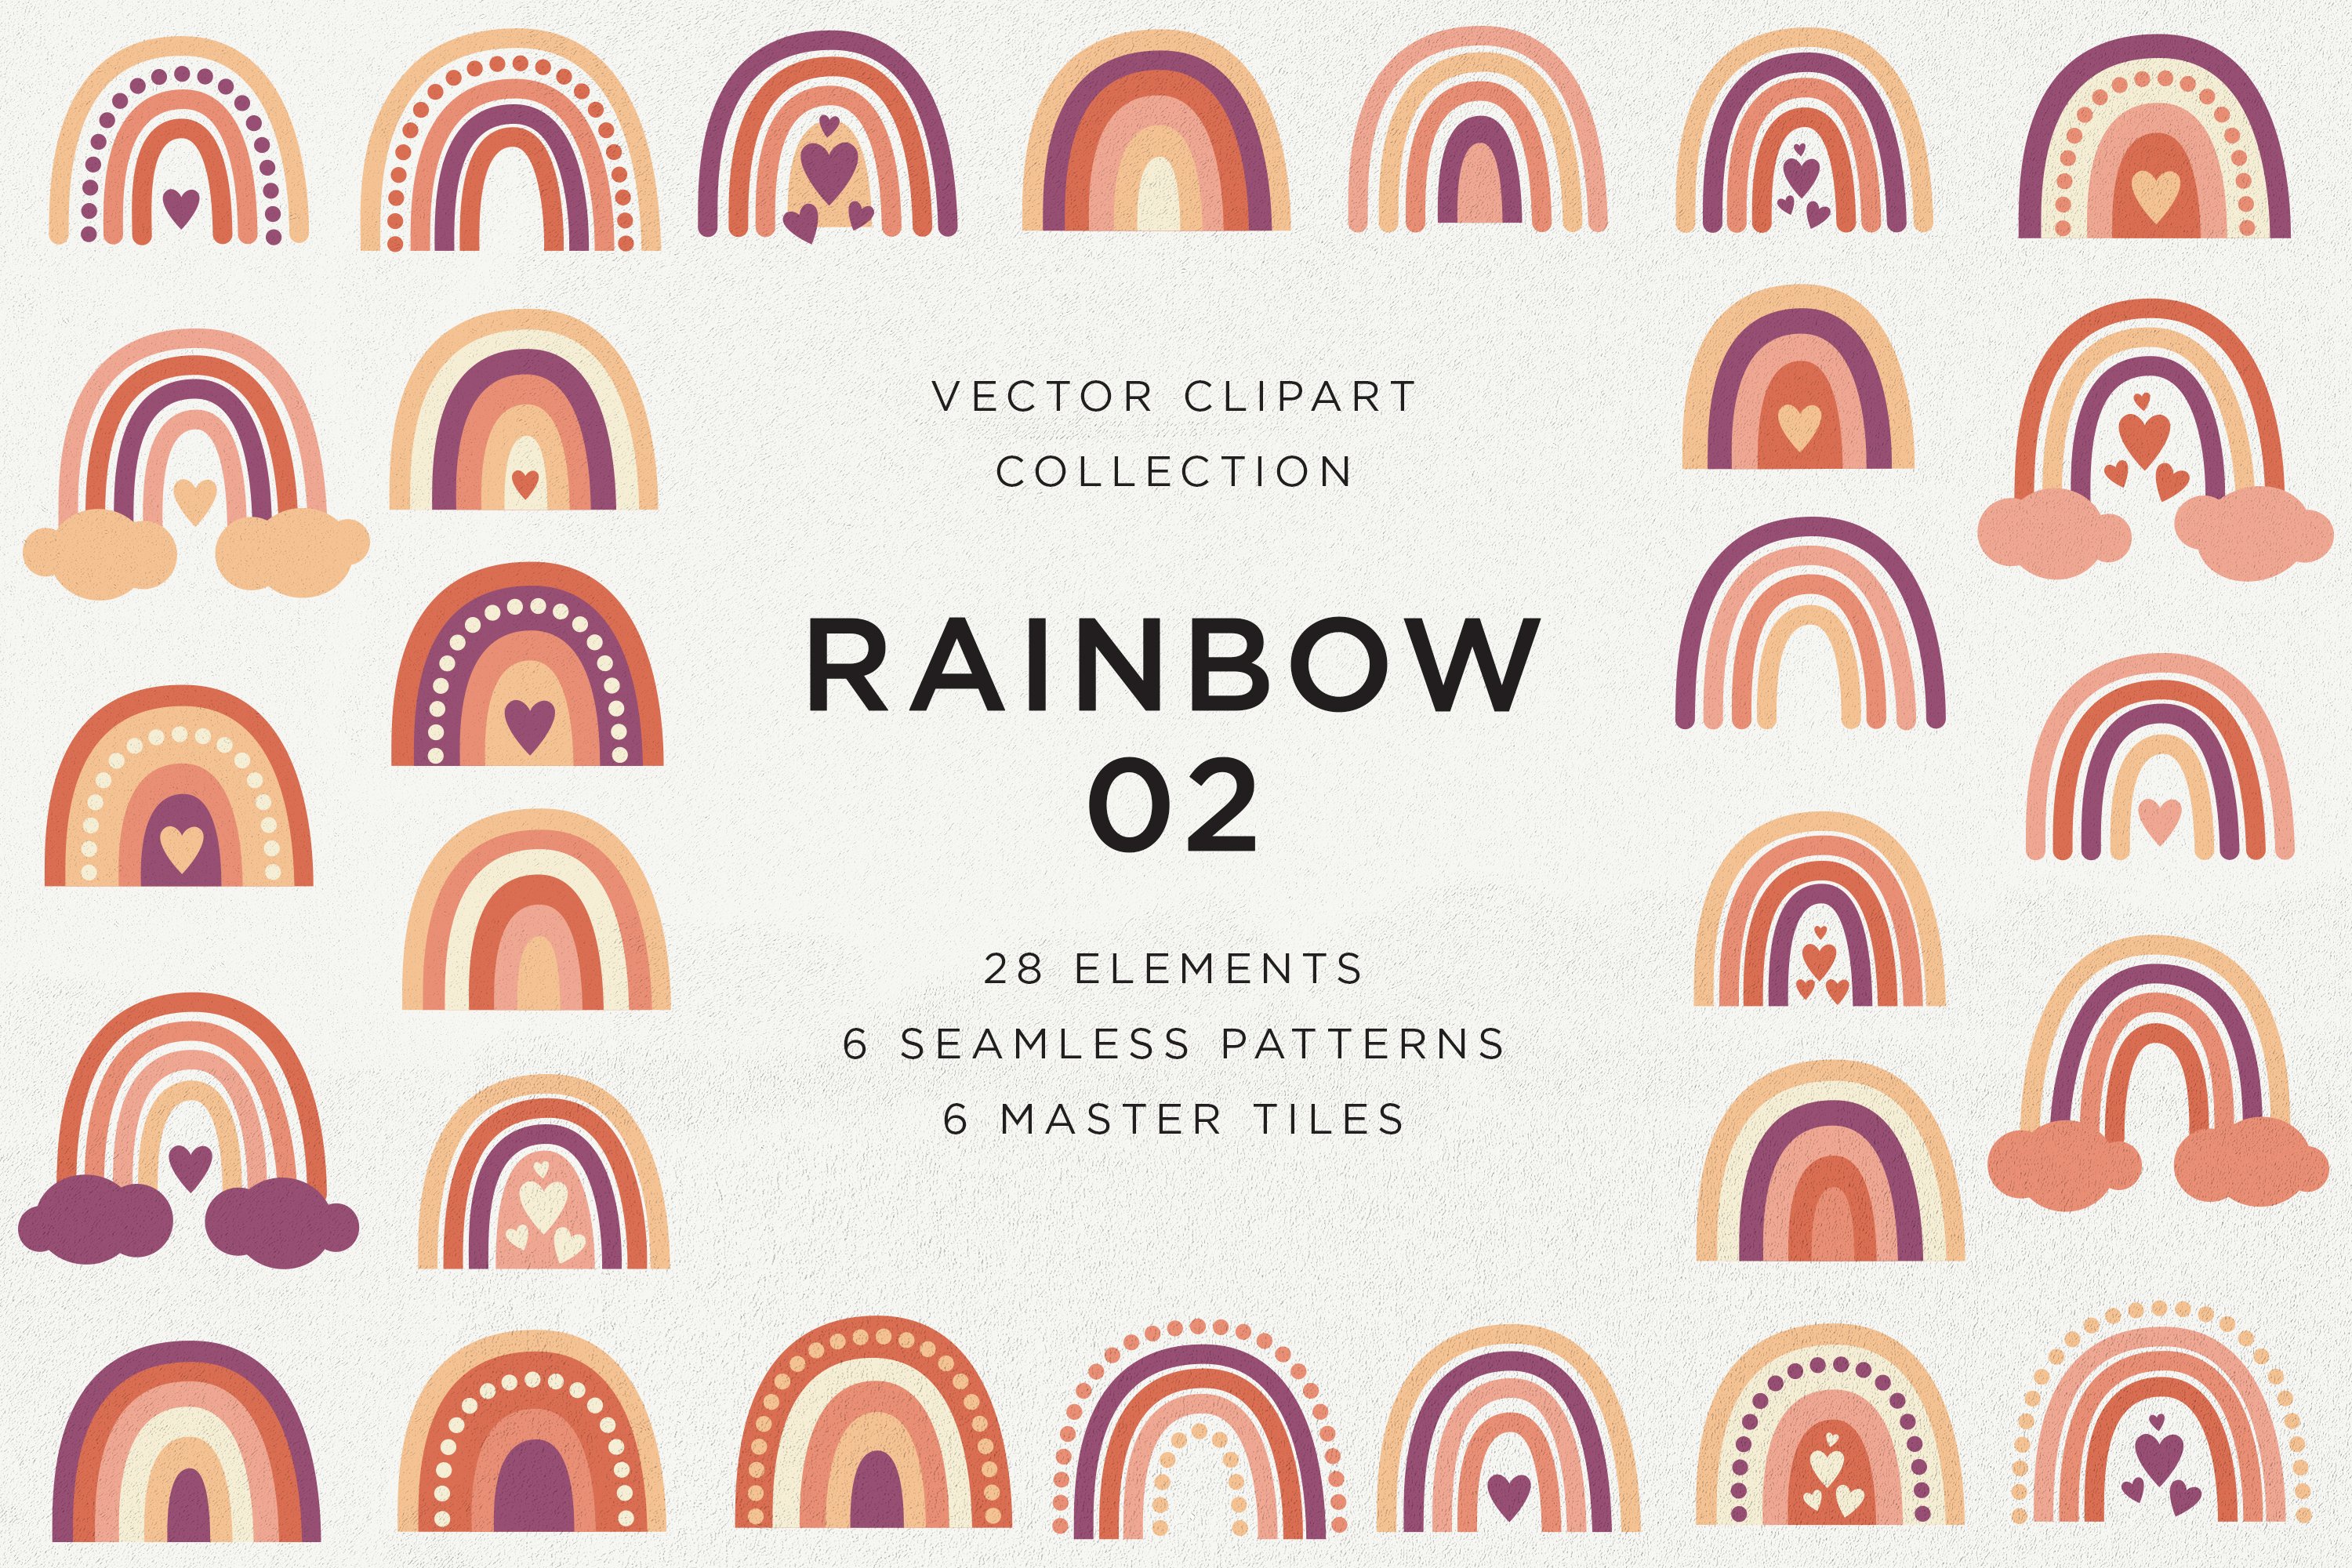 Rainbow Elements & Patterns Set #02 cover image.